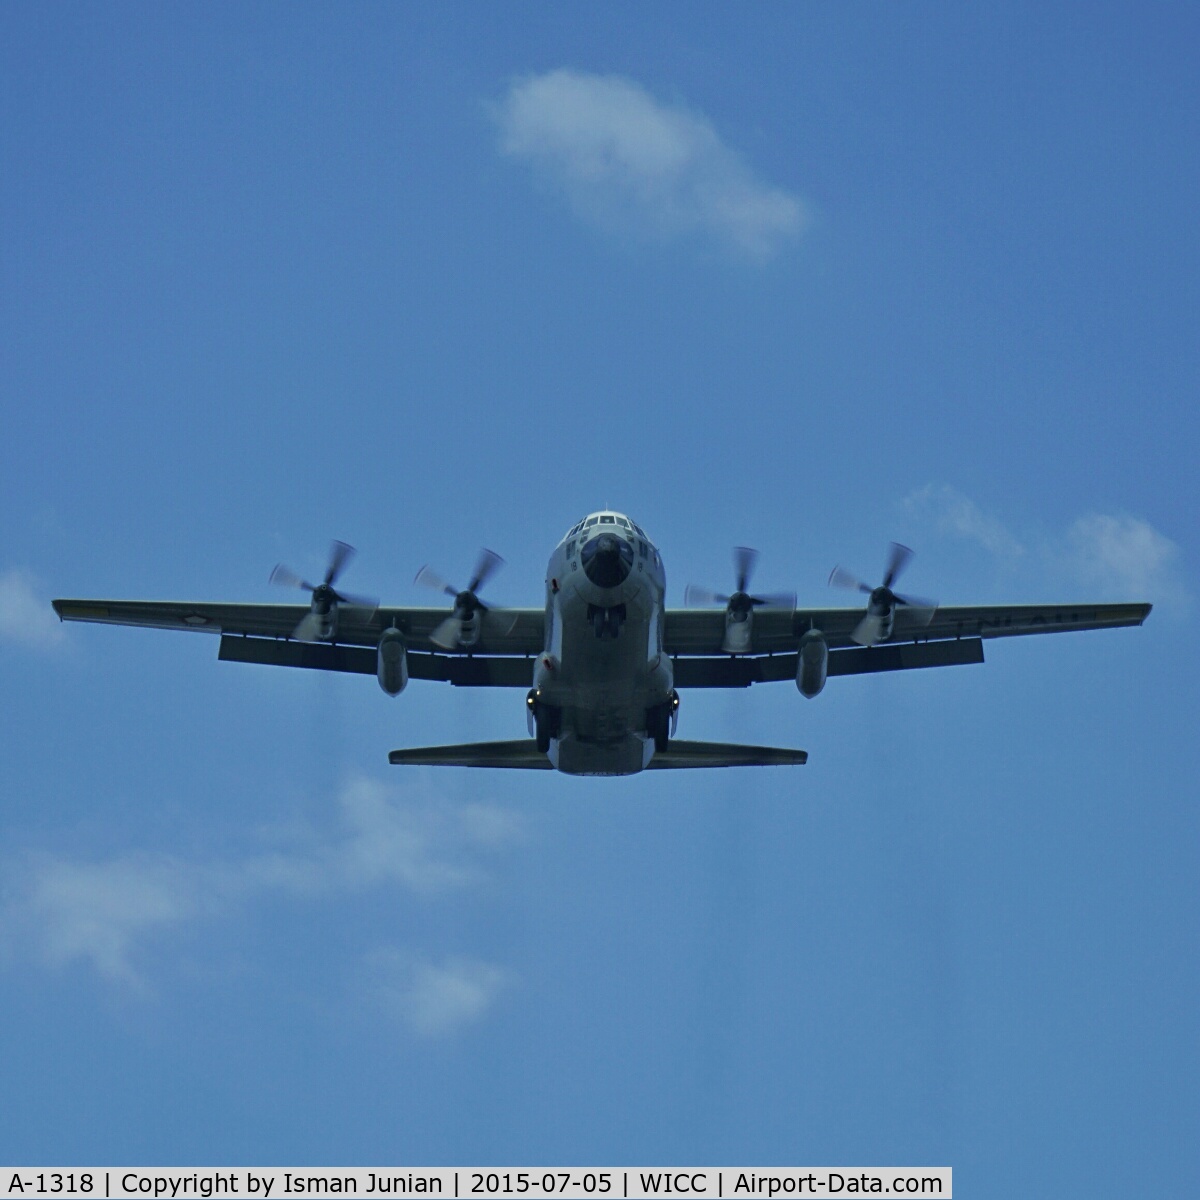 A-1318, Lockheed C-130H Hercules C/N 382-4865, A-1318 approaching runway 29 at WICC/BDO